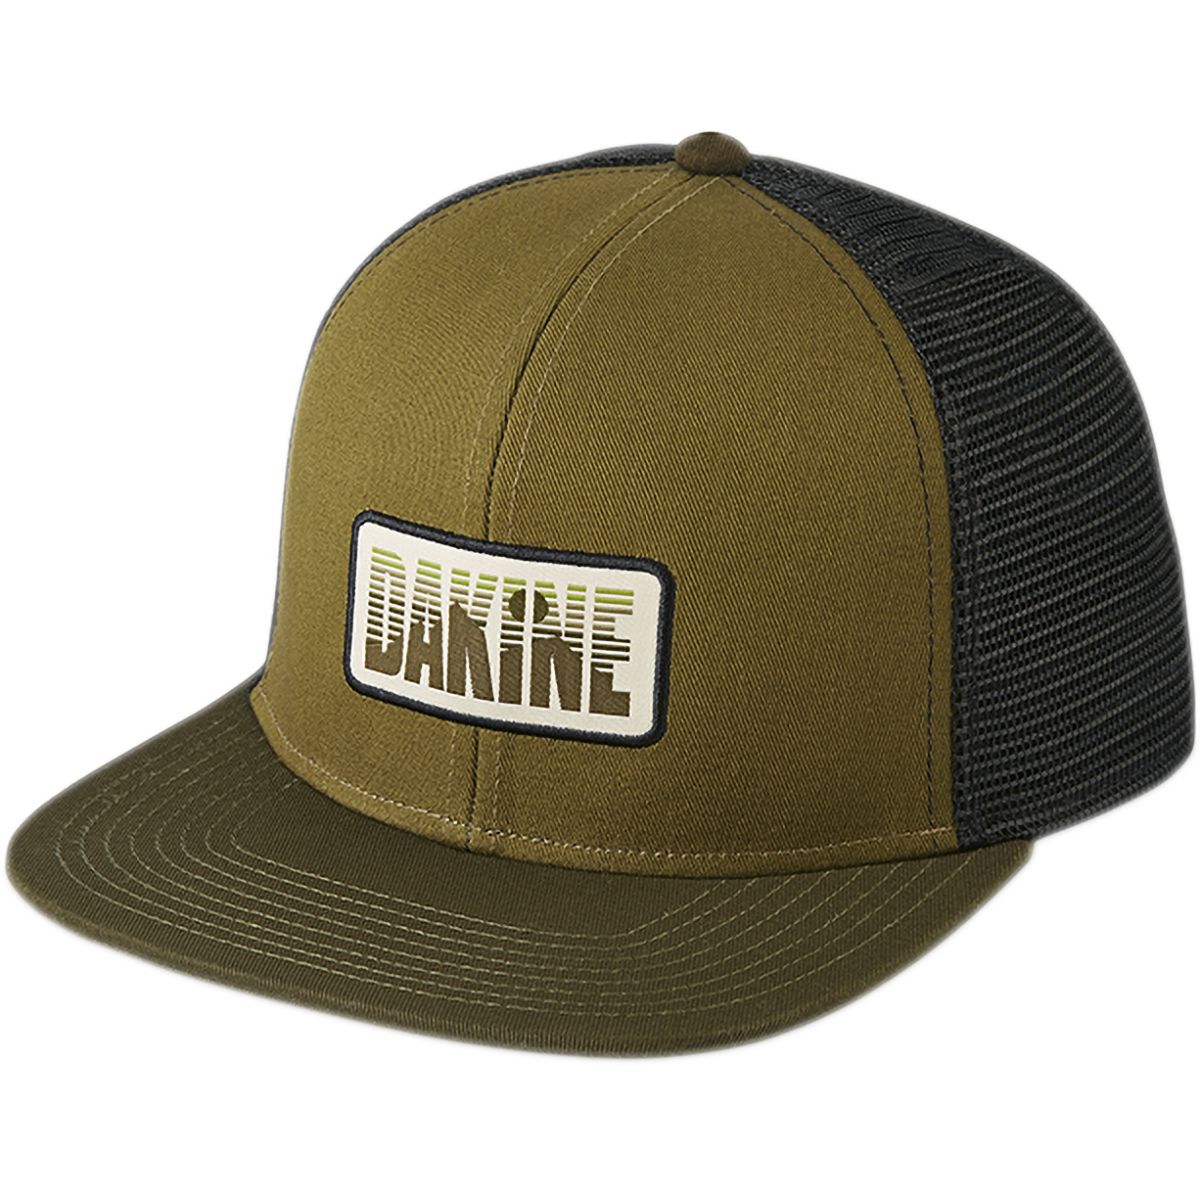 DAKINE Skyline Trucker Hat - Men's